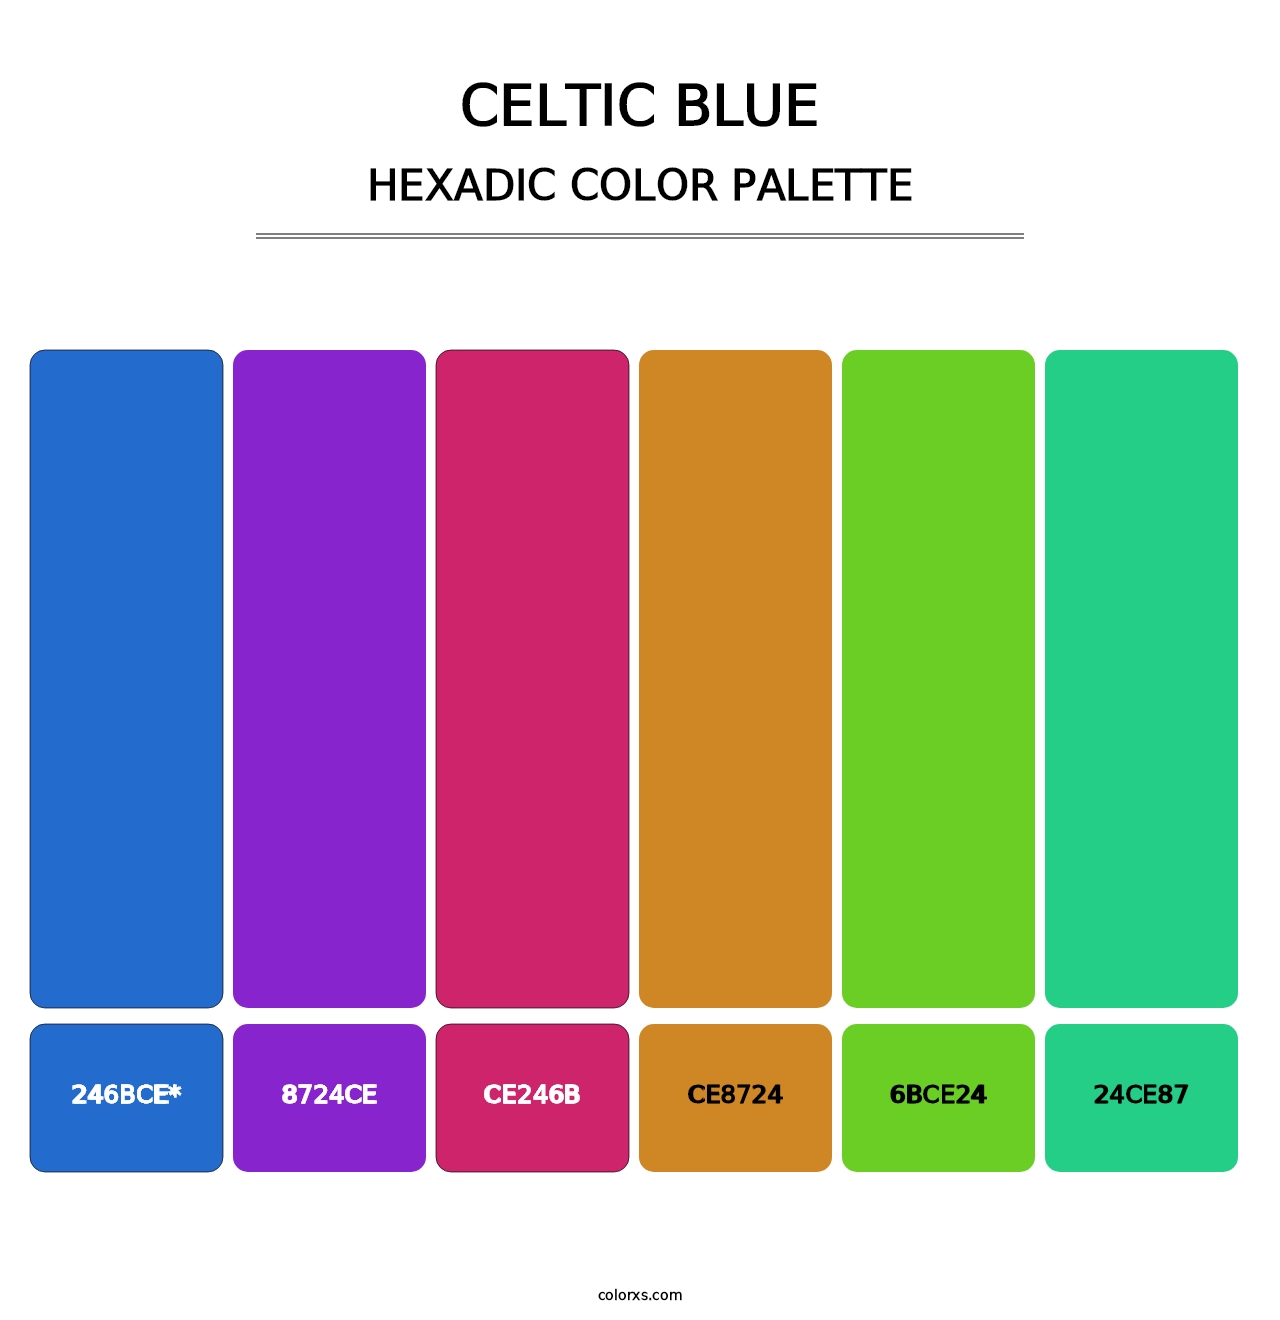 Celtic Blue - Hexadic Color Palette